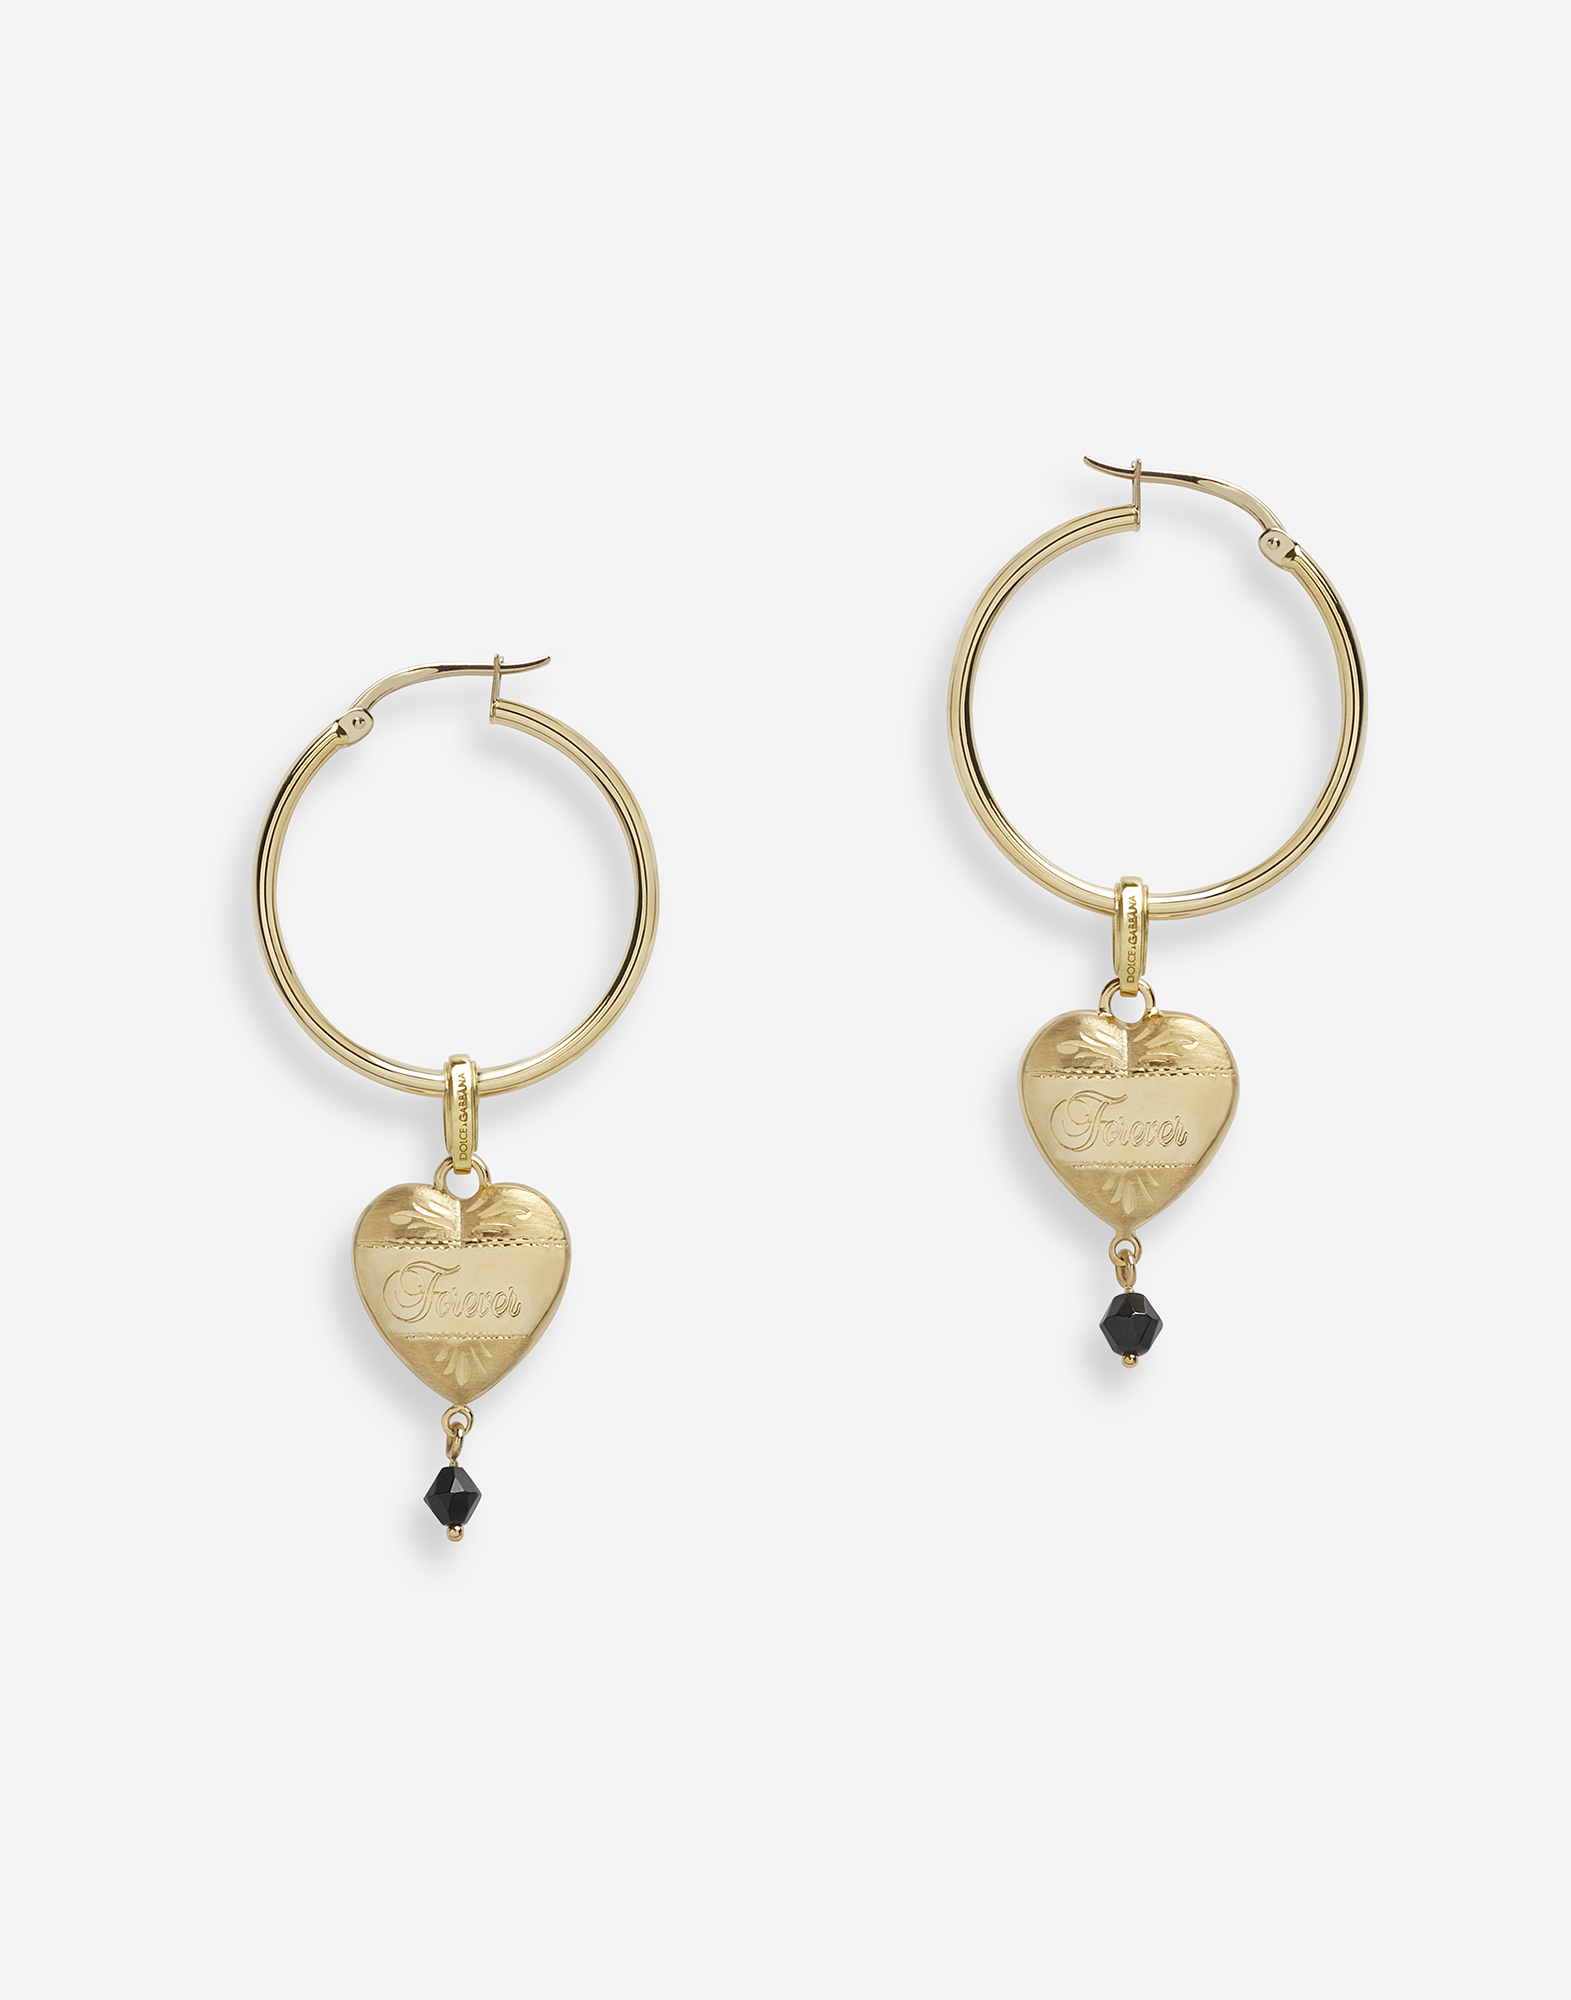 Hoop earrings with heart pendant in Gold